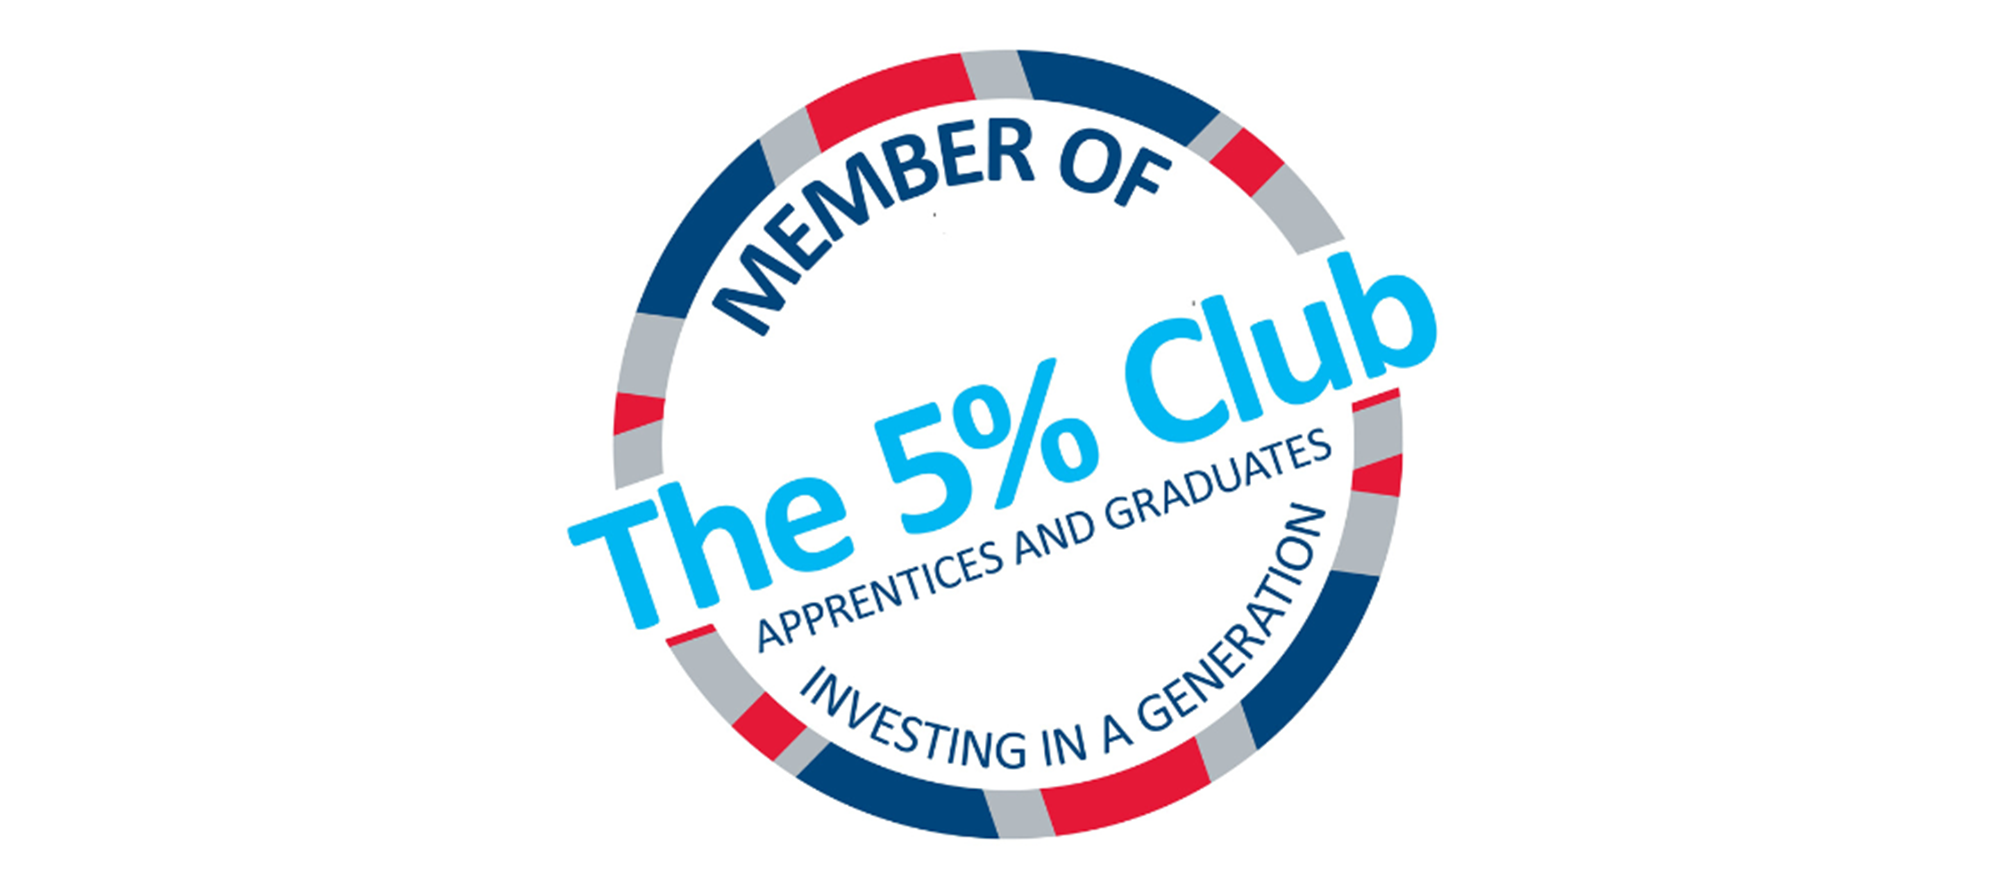 5% club gold membership